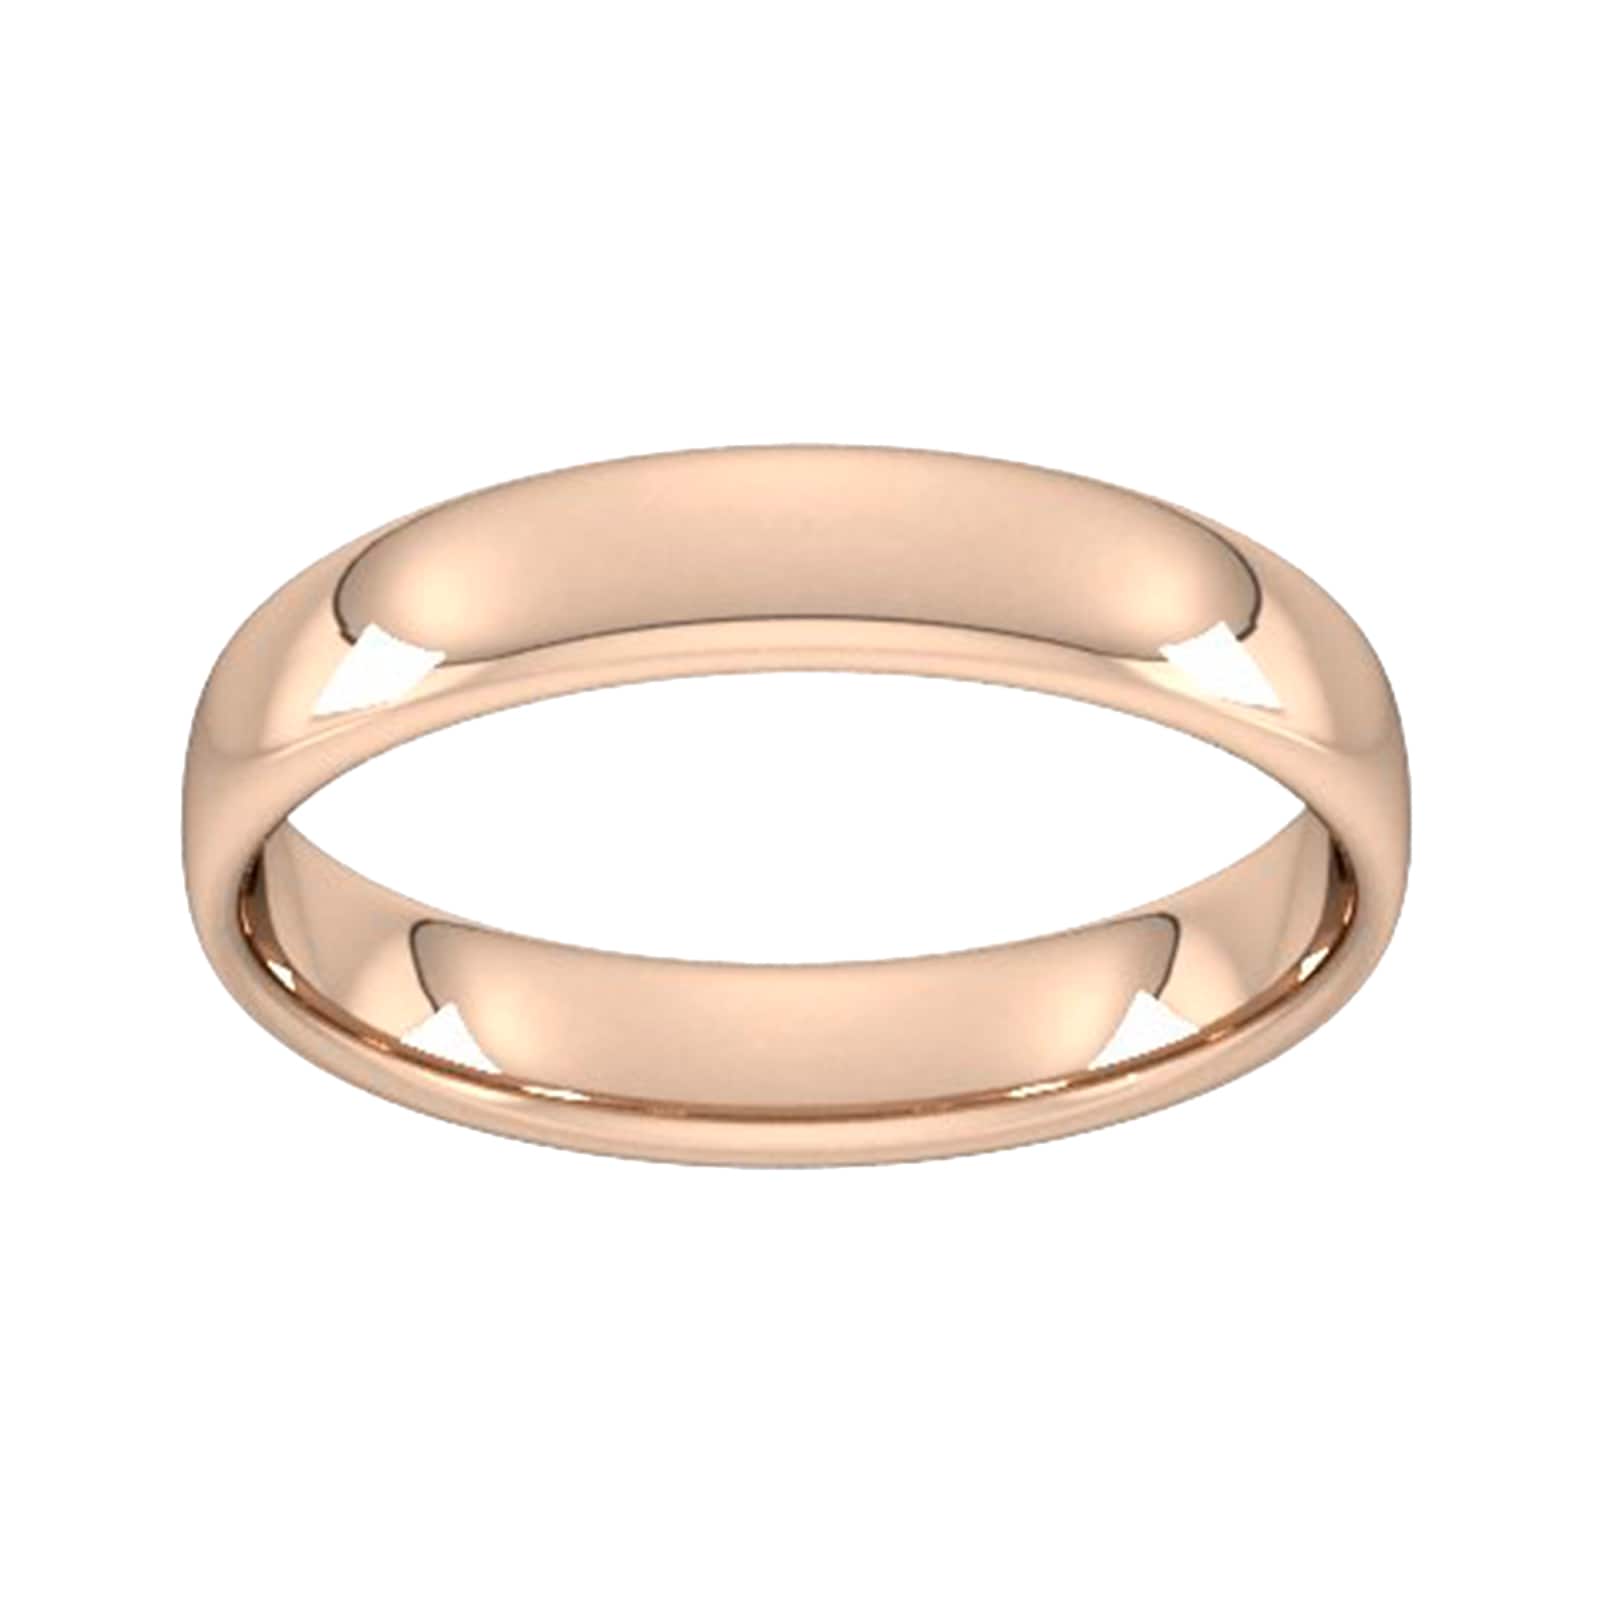 4mm Slight Court Standard Wedding Ring In 18 Carat Rose Gold - Ring Size Q